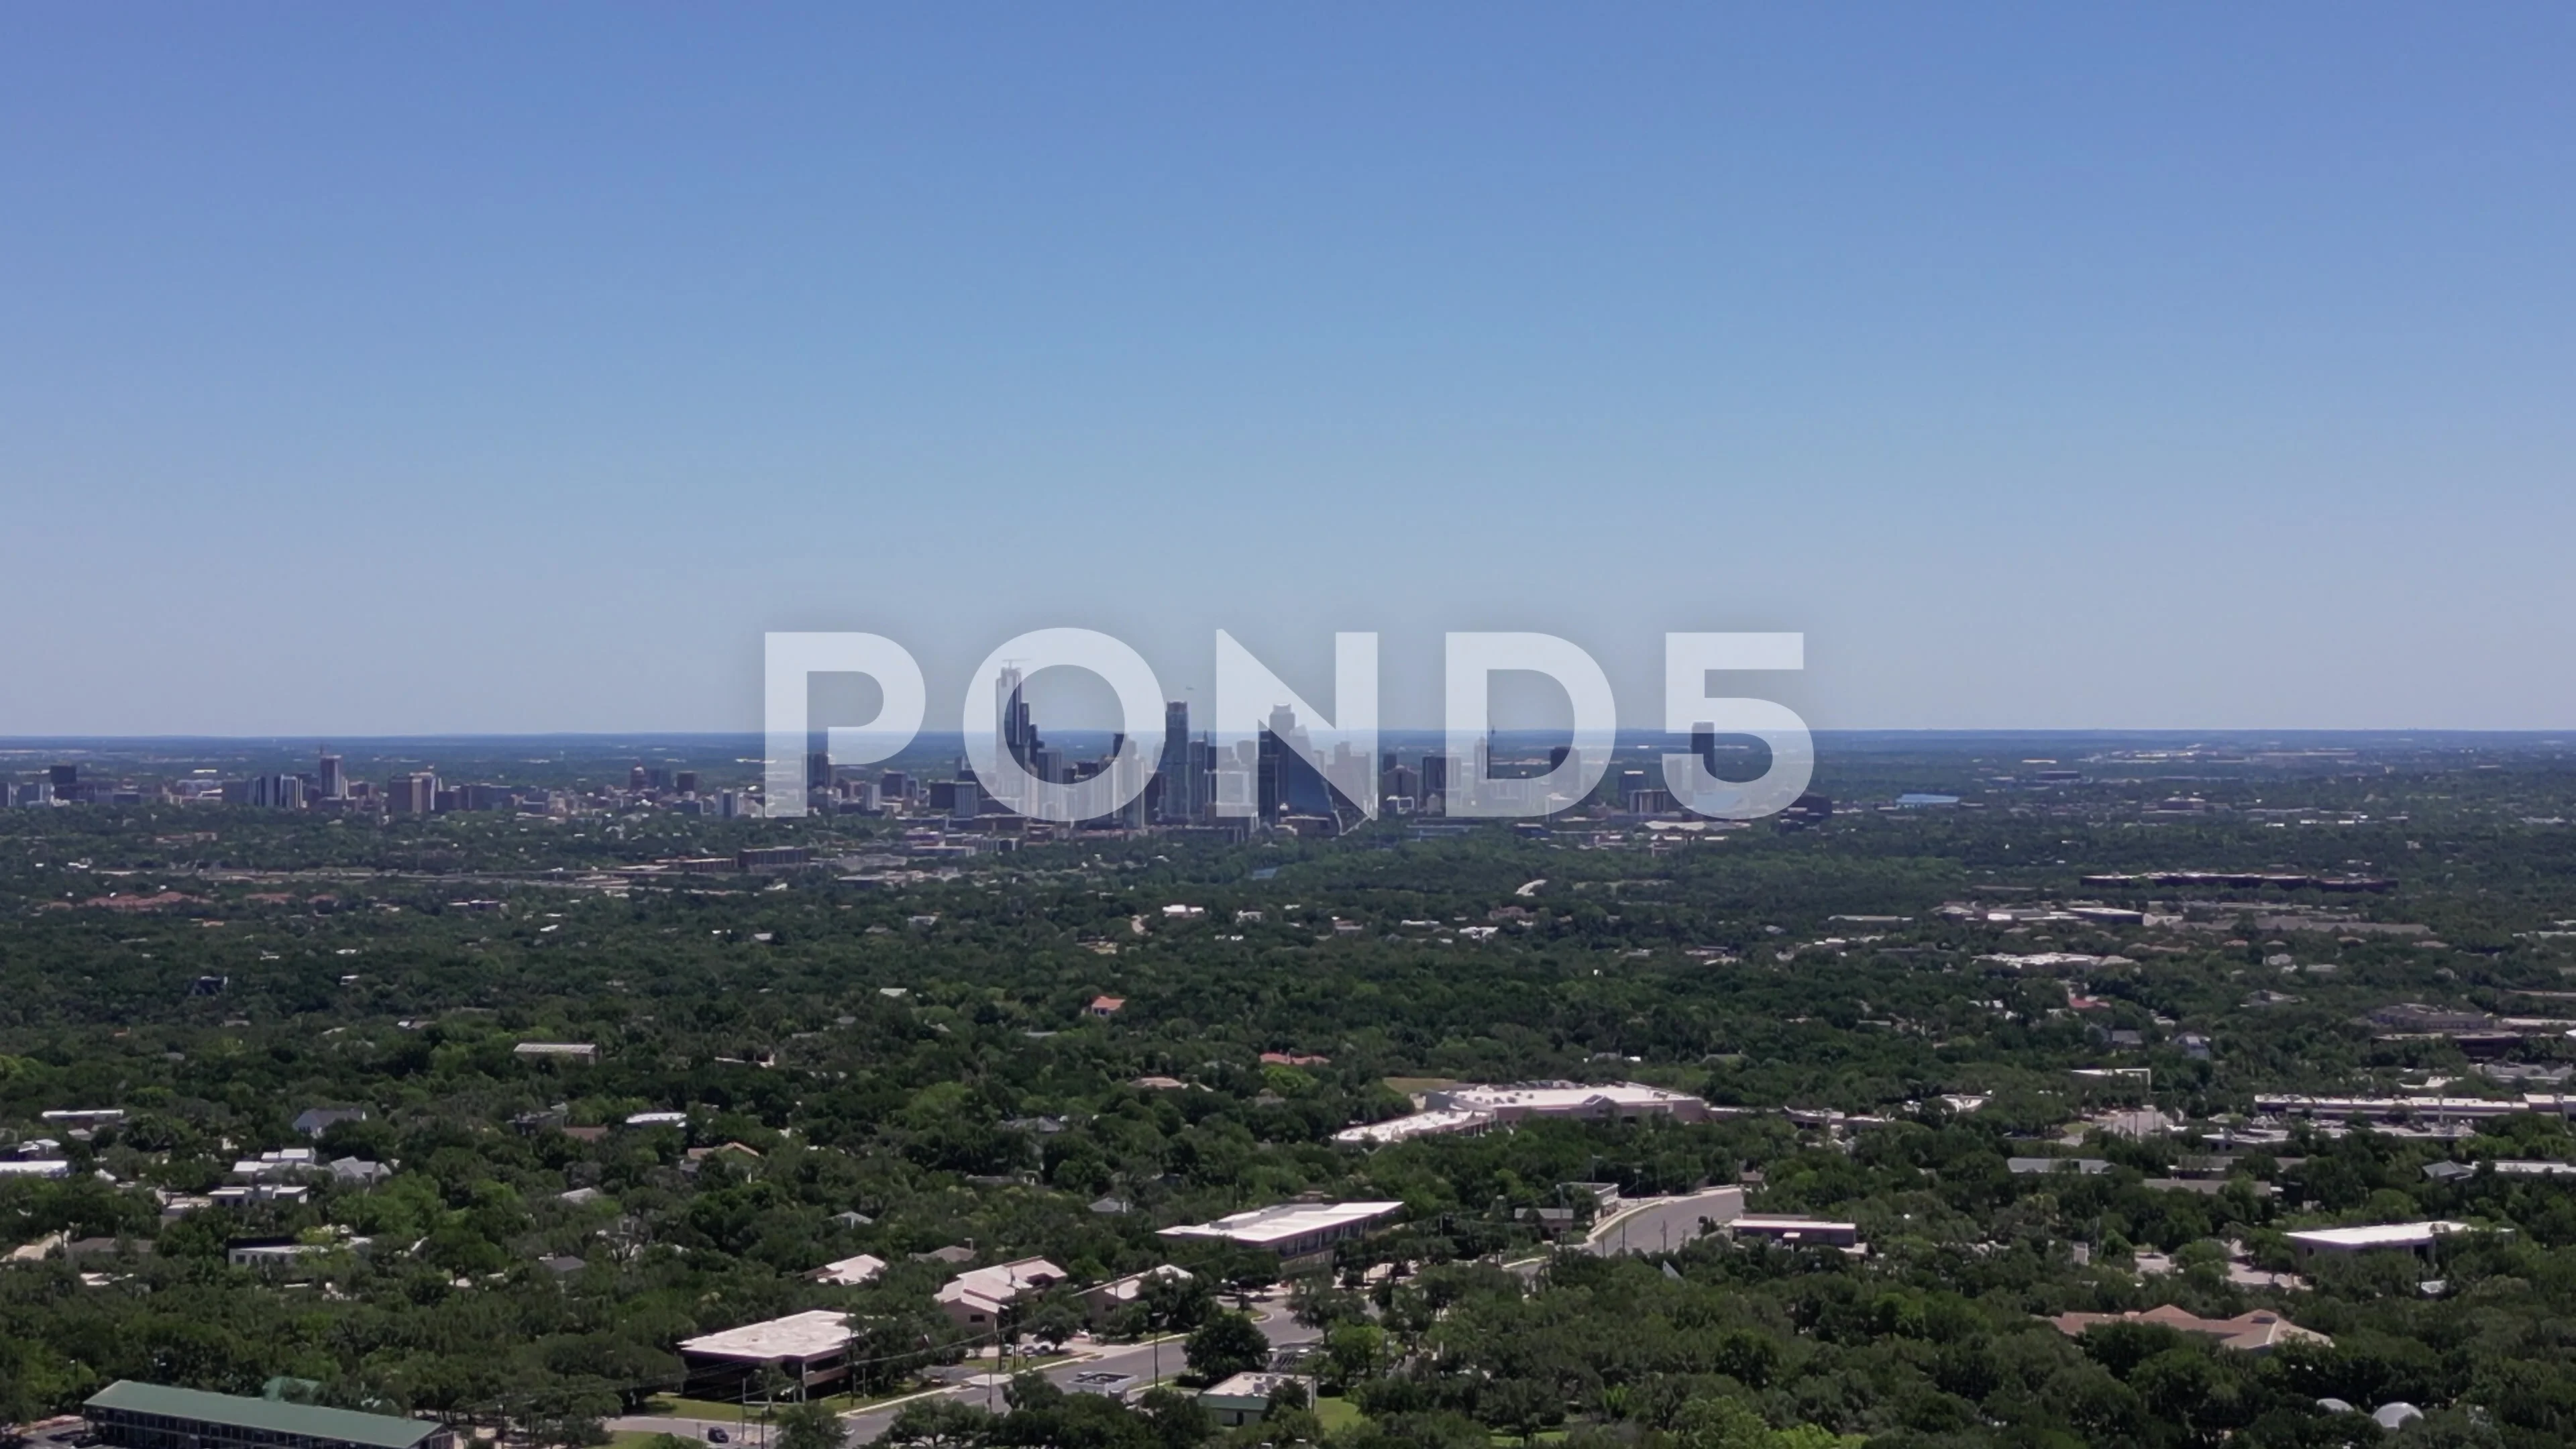 Austin, Texas  4K drone footage 